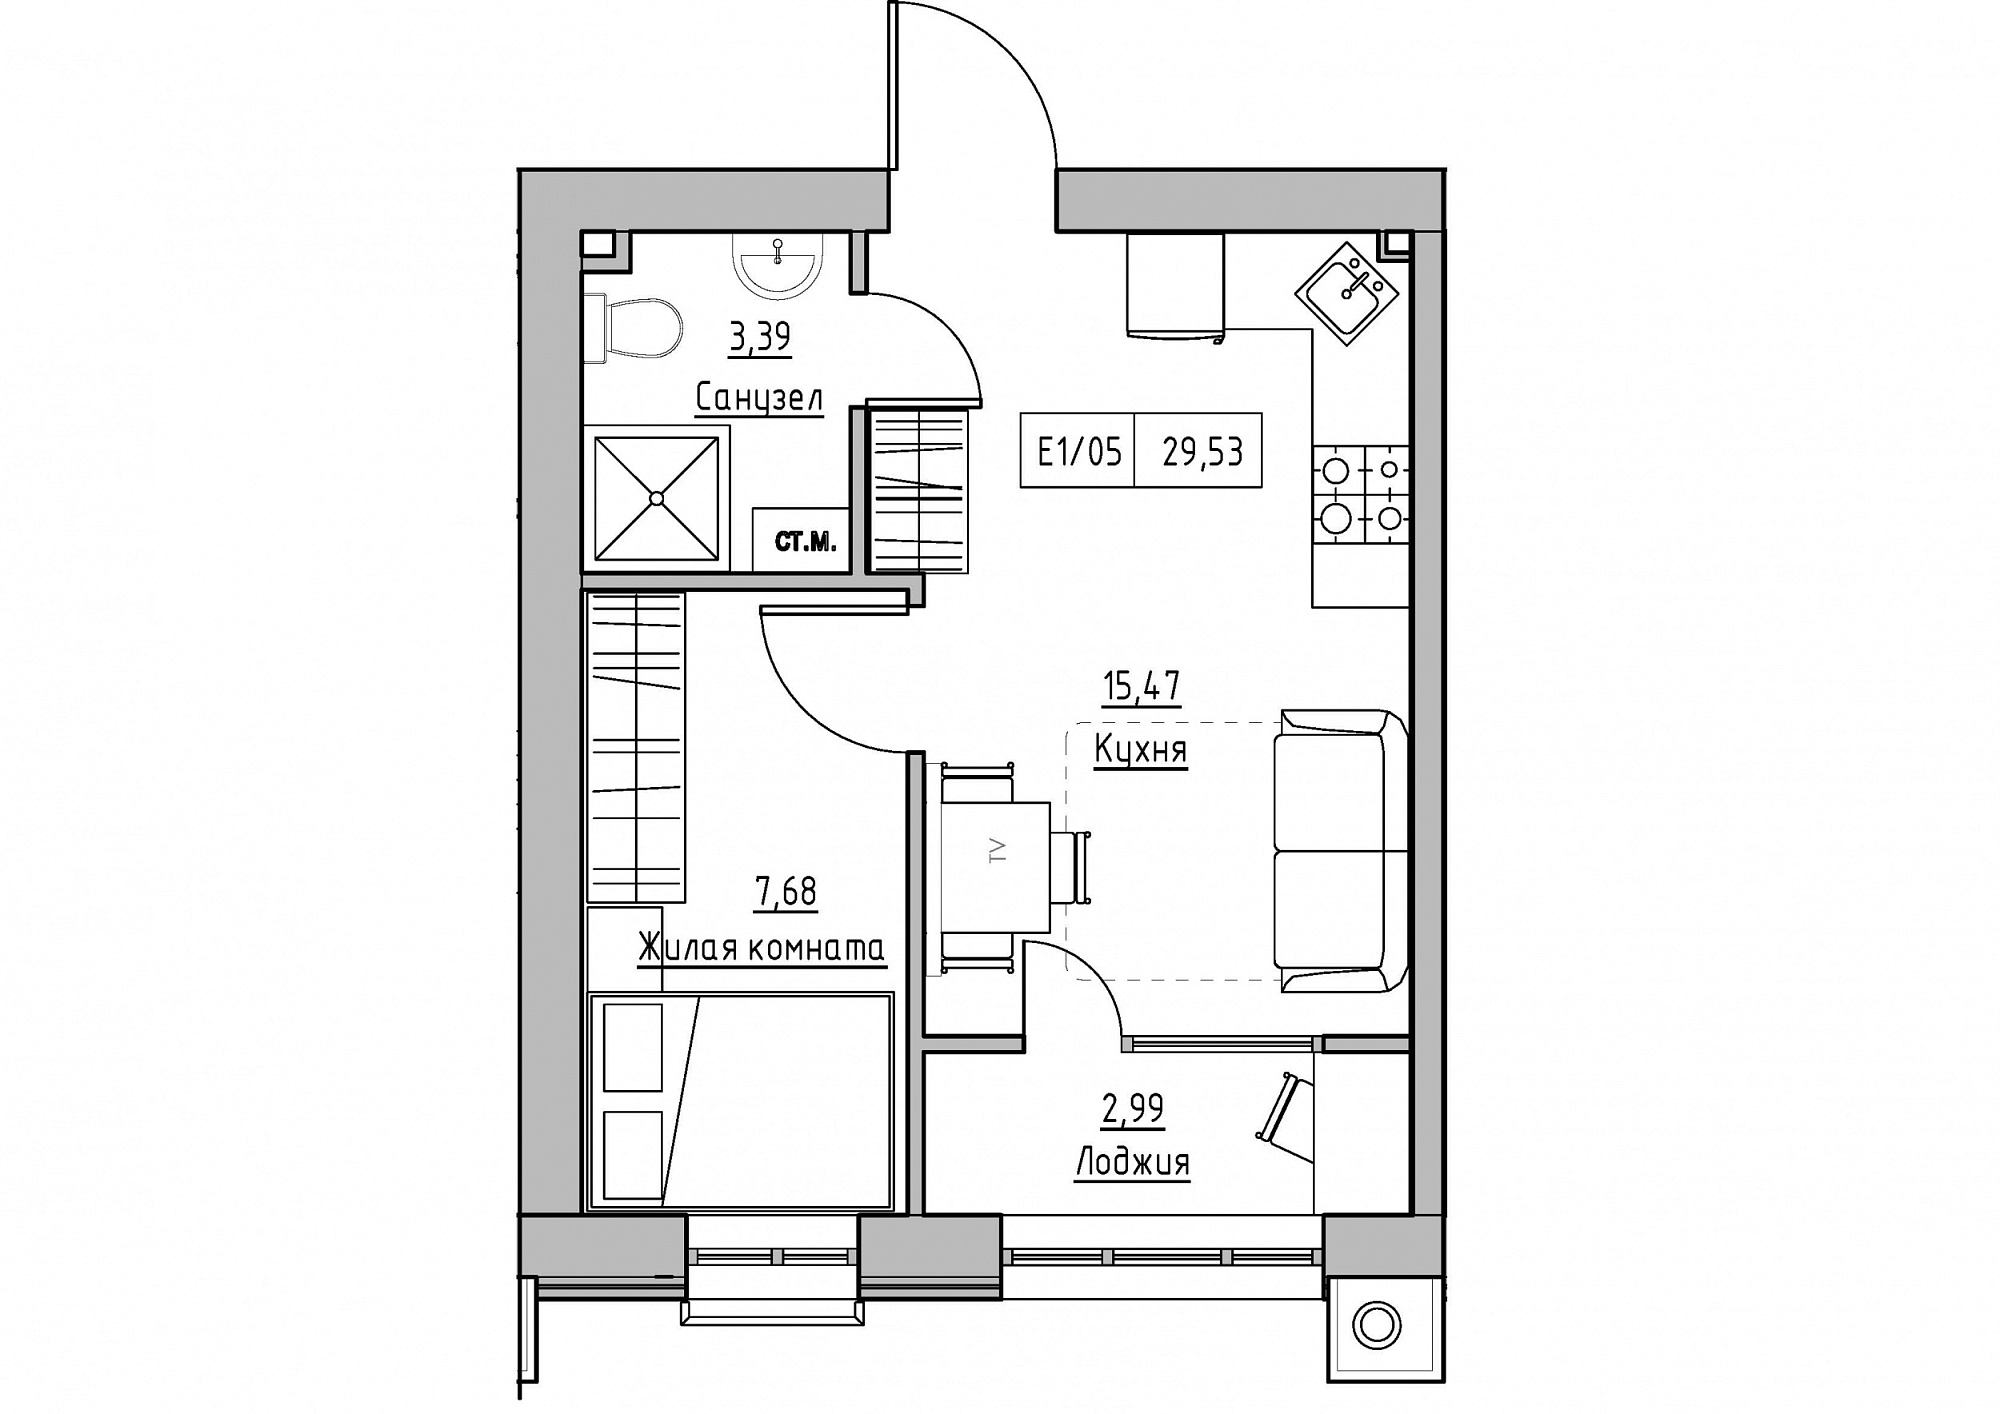 Planning 1-rm flats area 29.53m2, KS-011-02/0010.